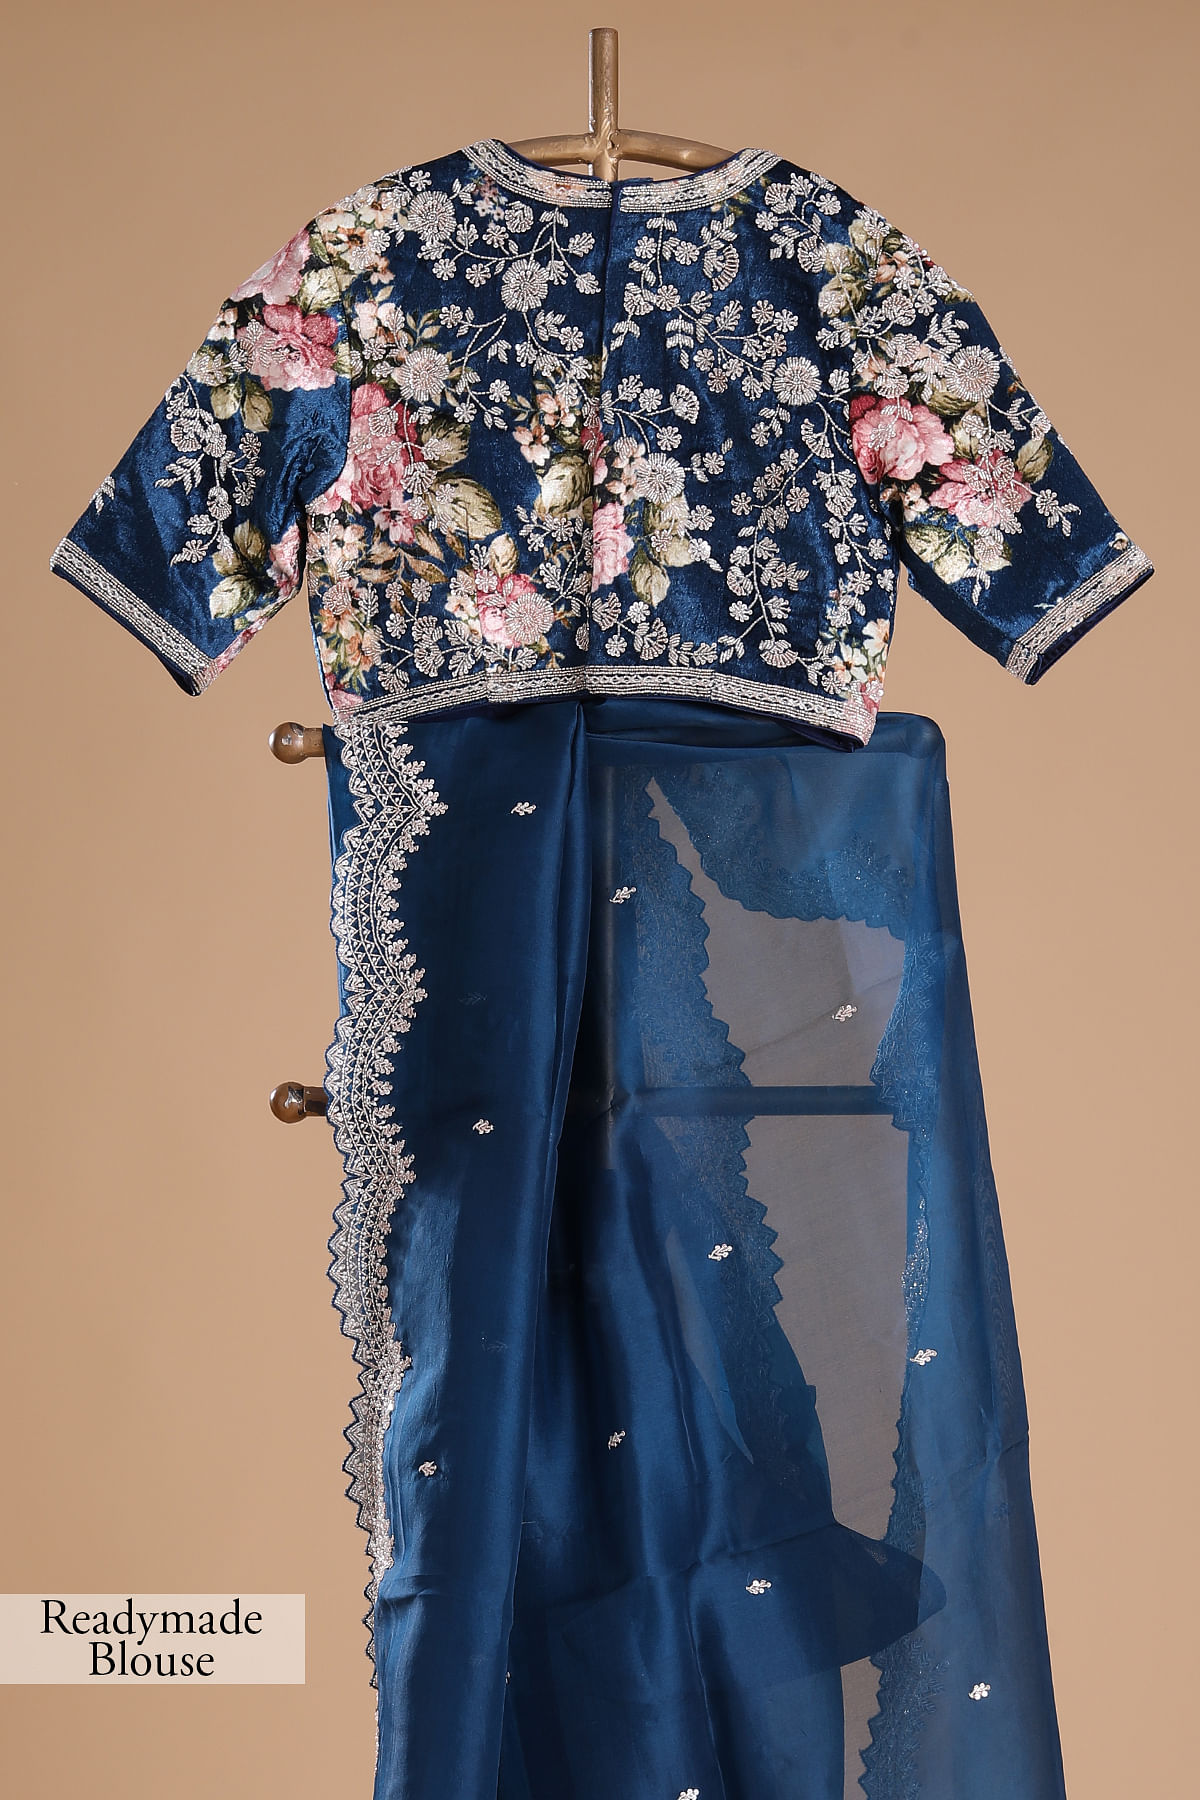 Shop Indigo Cotton Petticoat Collection Online at Soch India